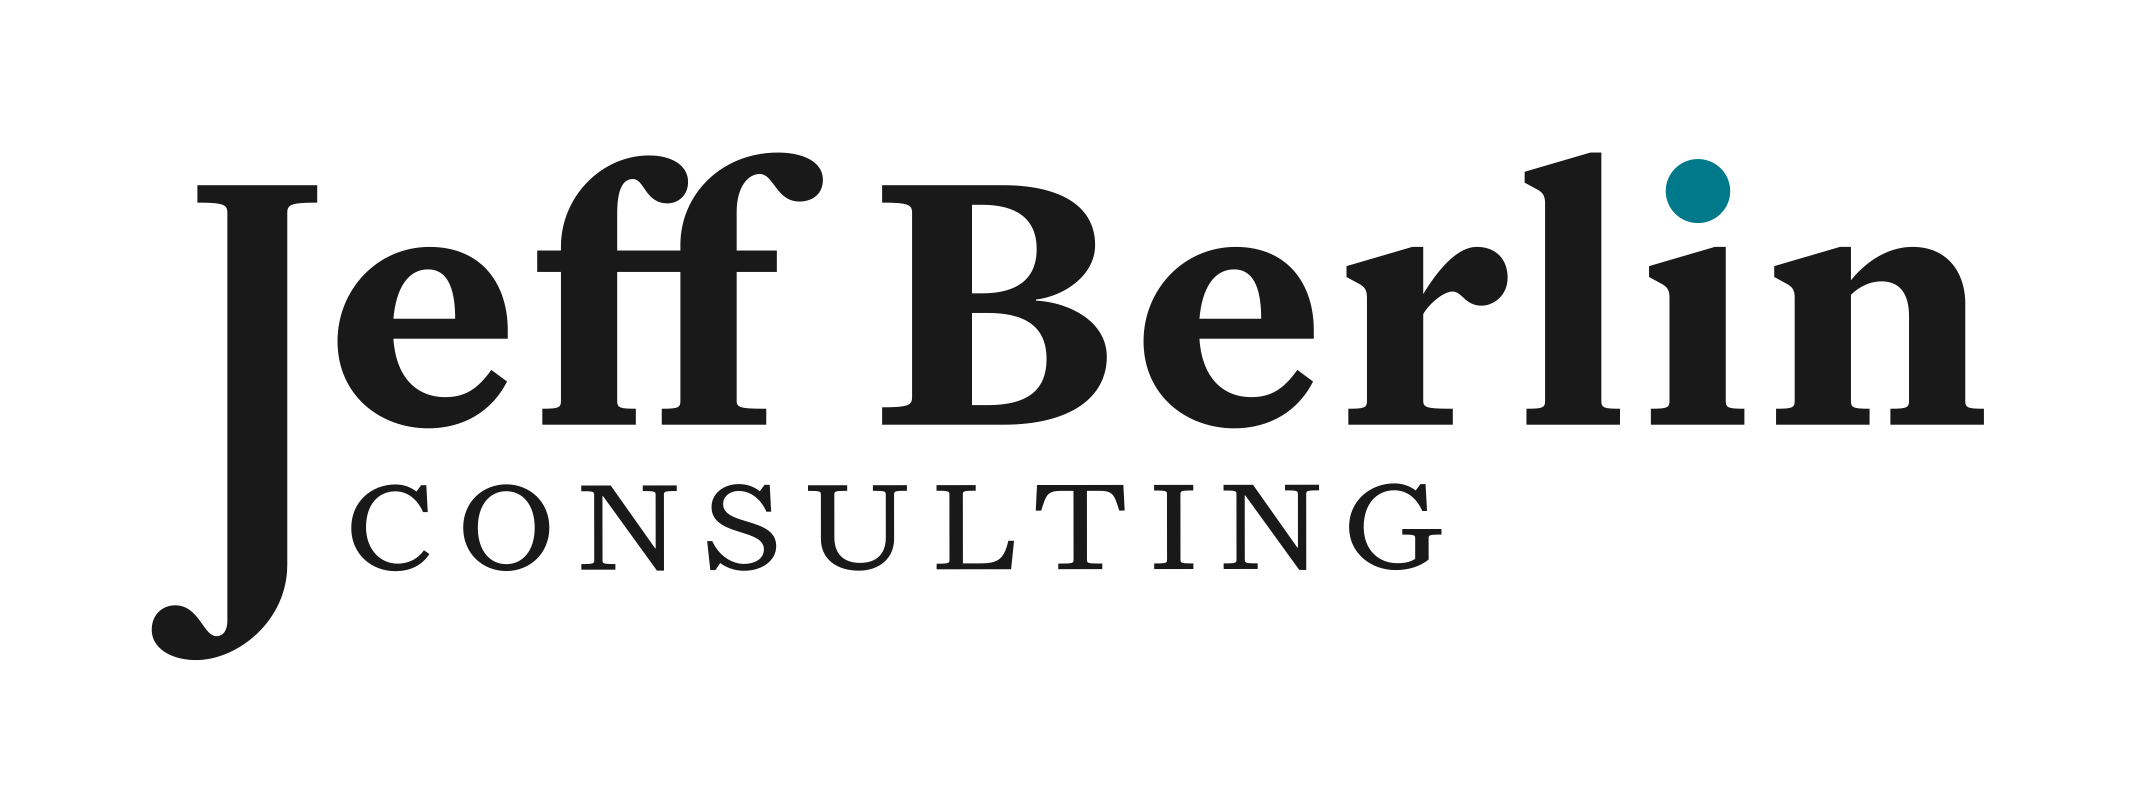 Jeff Berlin Consulting